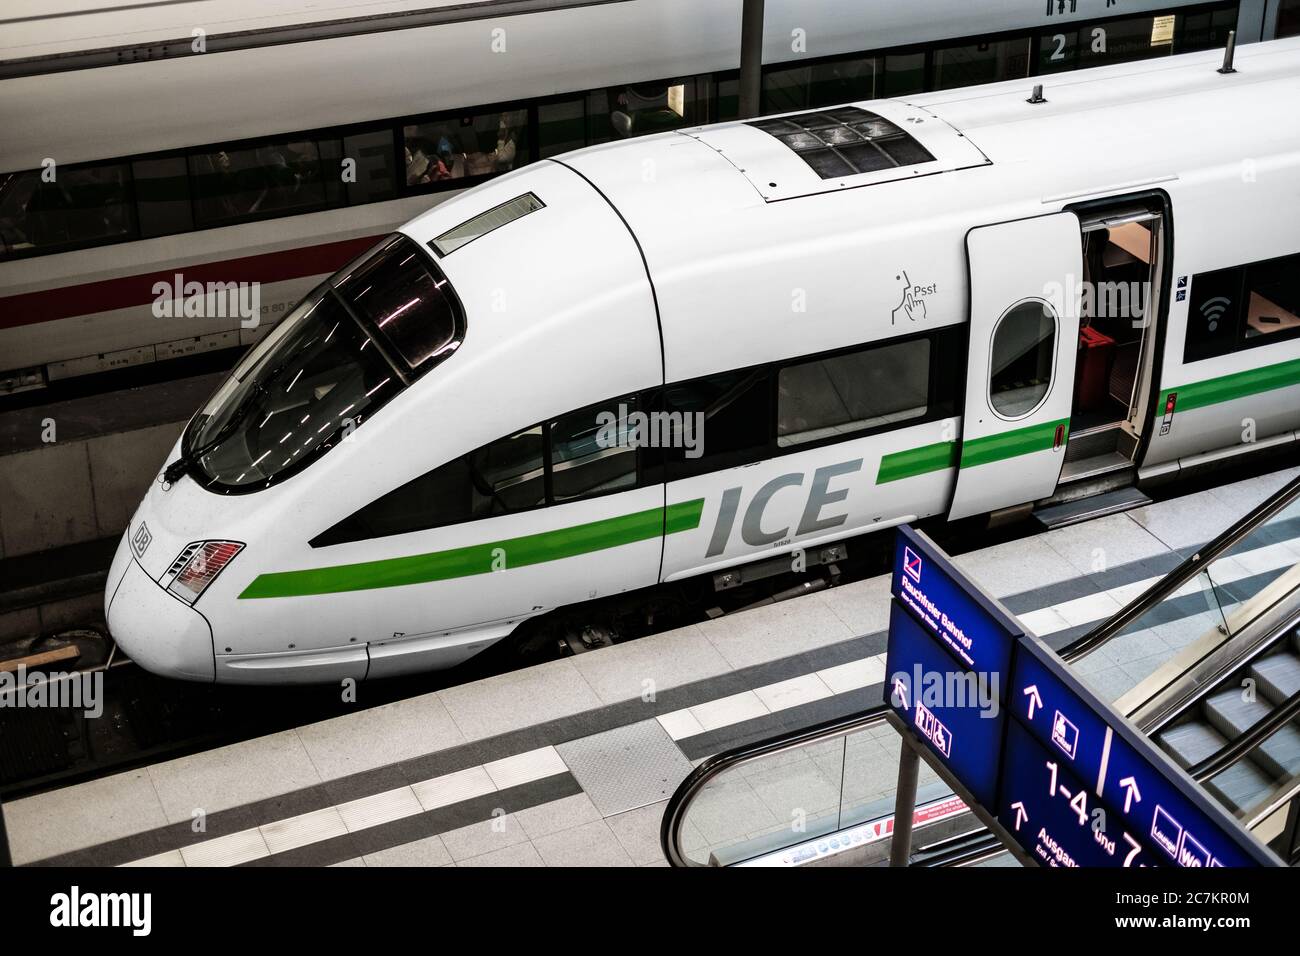 Berlin, Germany - July, 2020: Green Energy ICE train locomotive at trainstatipon platform ( Berlin Hauptbahnhof) Stock Photo